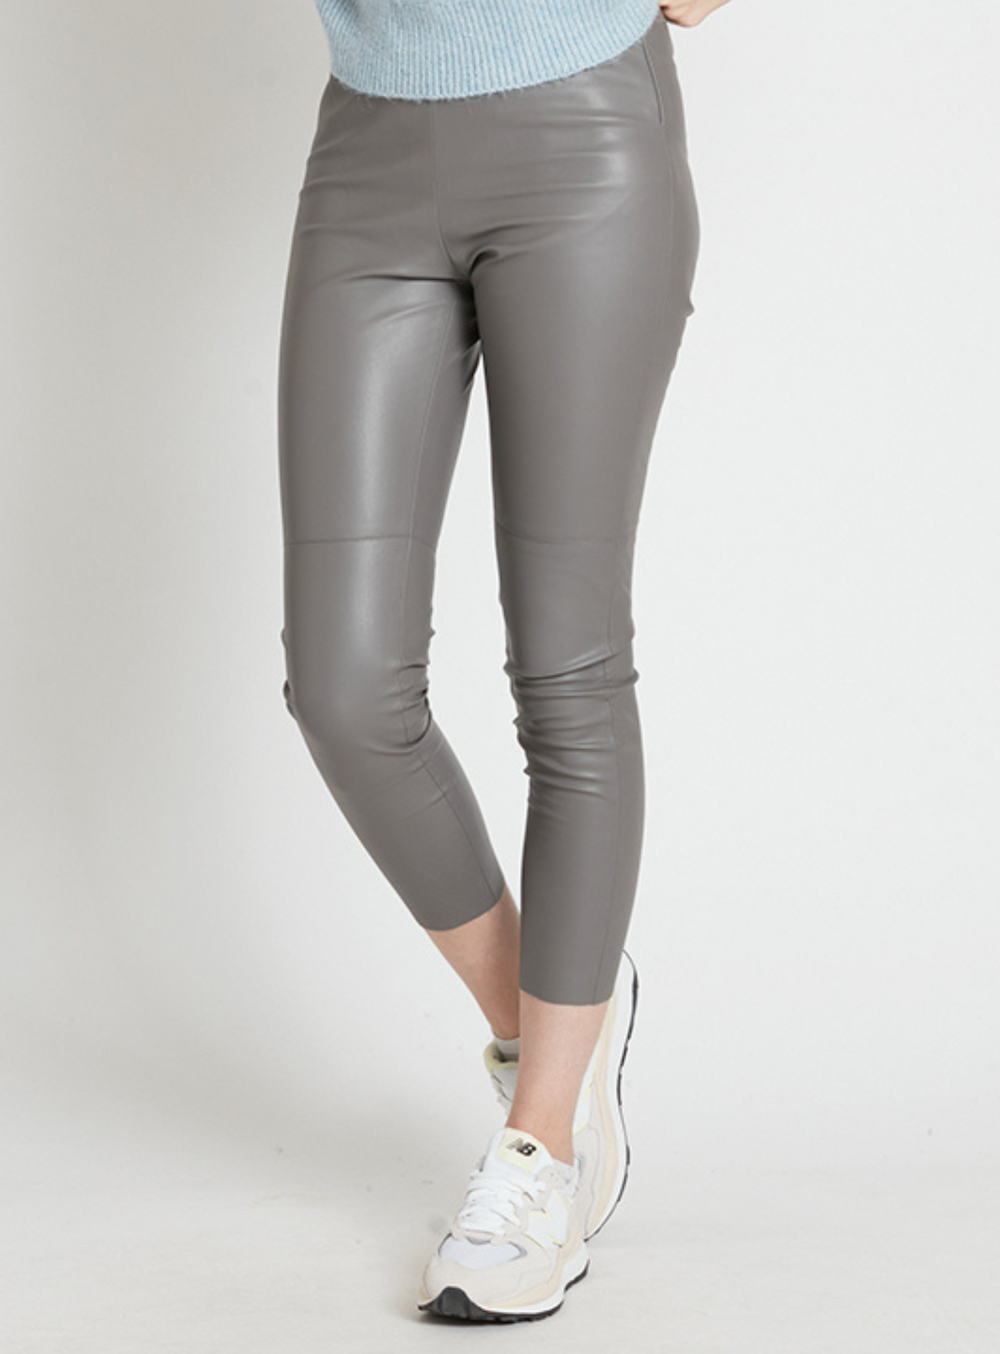 Ecru Womens Leggings Pants Gray Size M Lot 2 - Shop Linda's Stuff